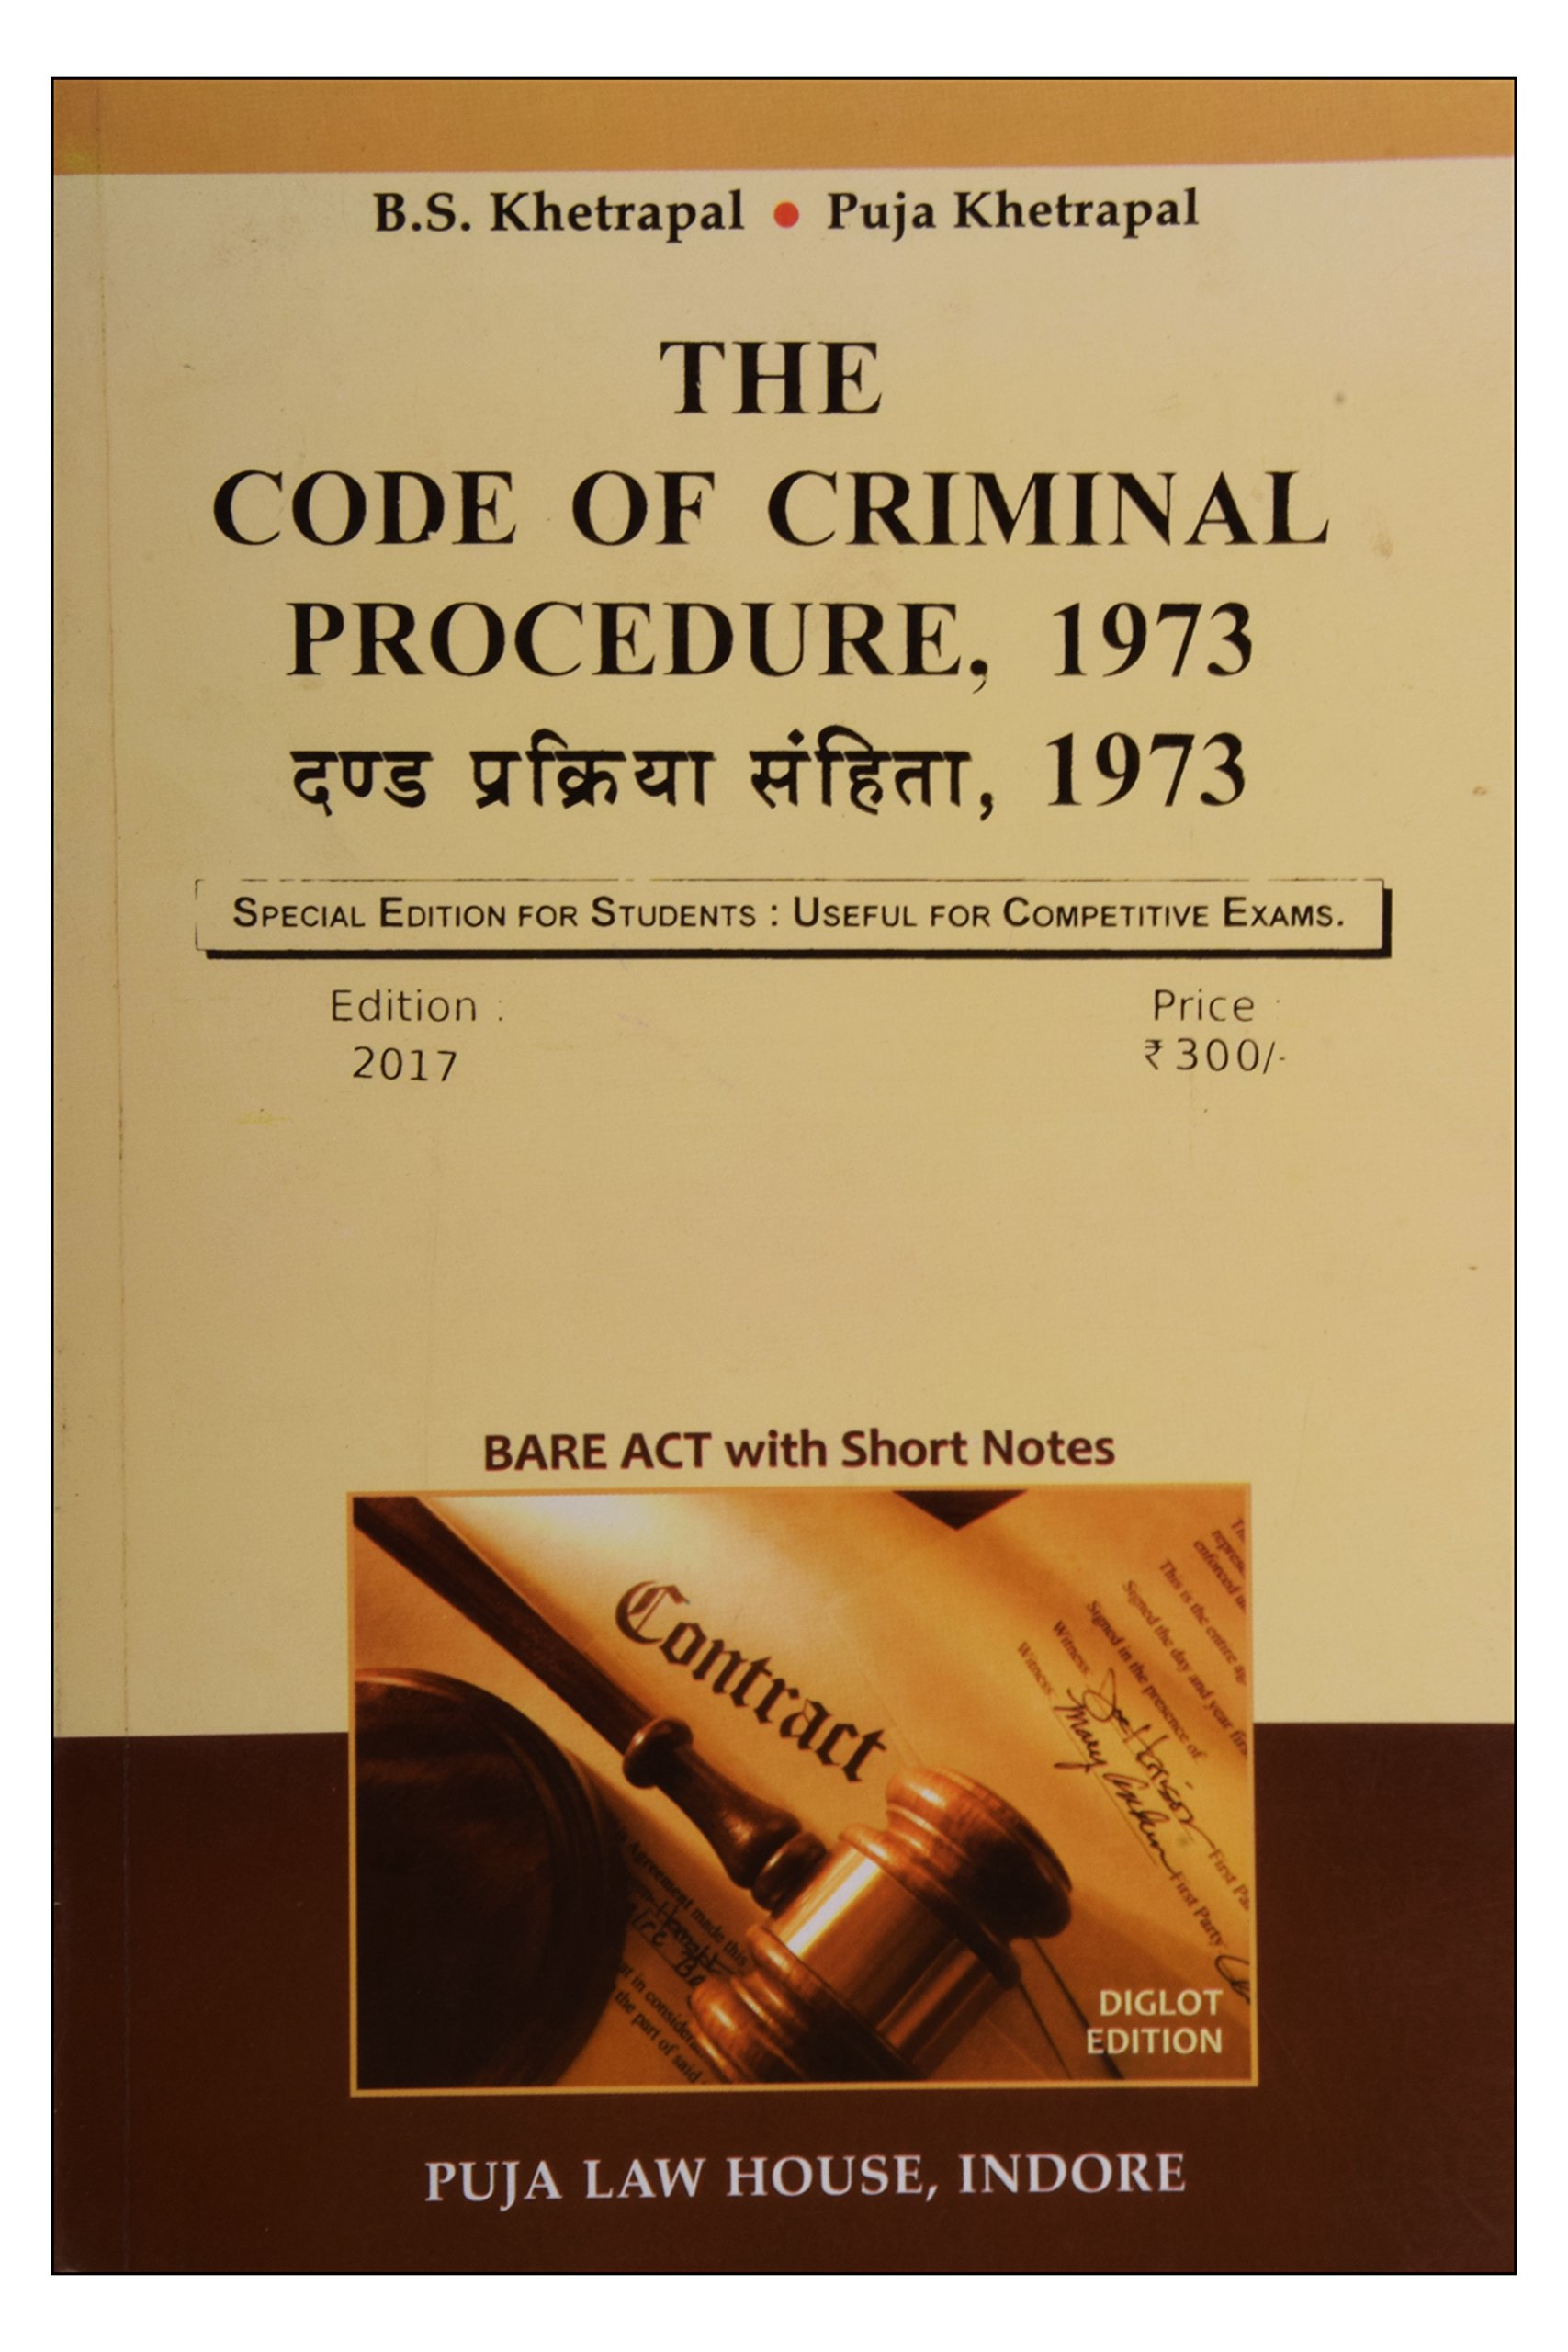 Criminal procedure code 1973 pdf